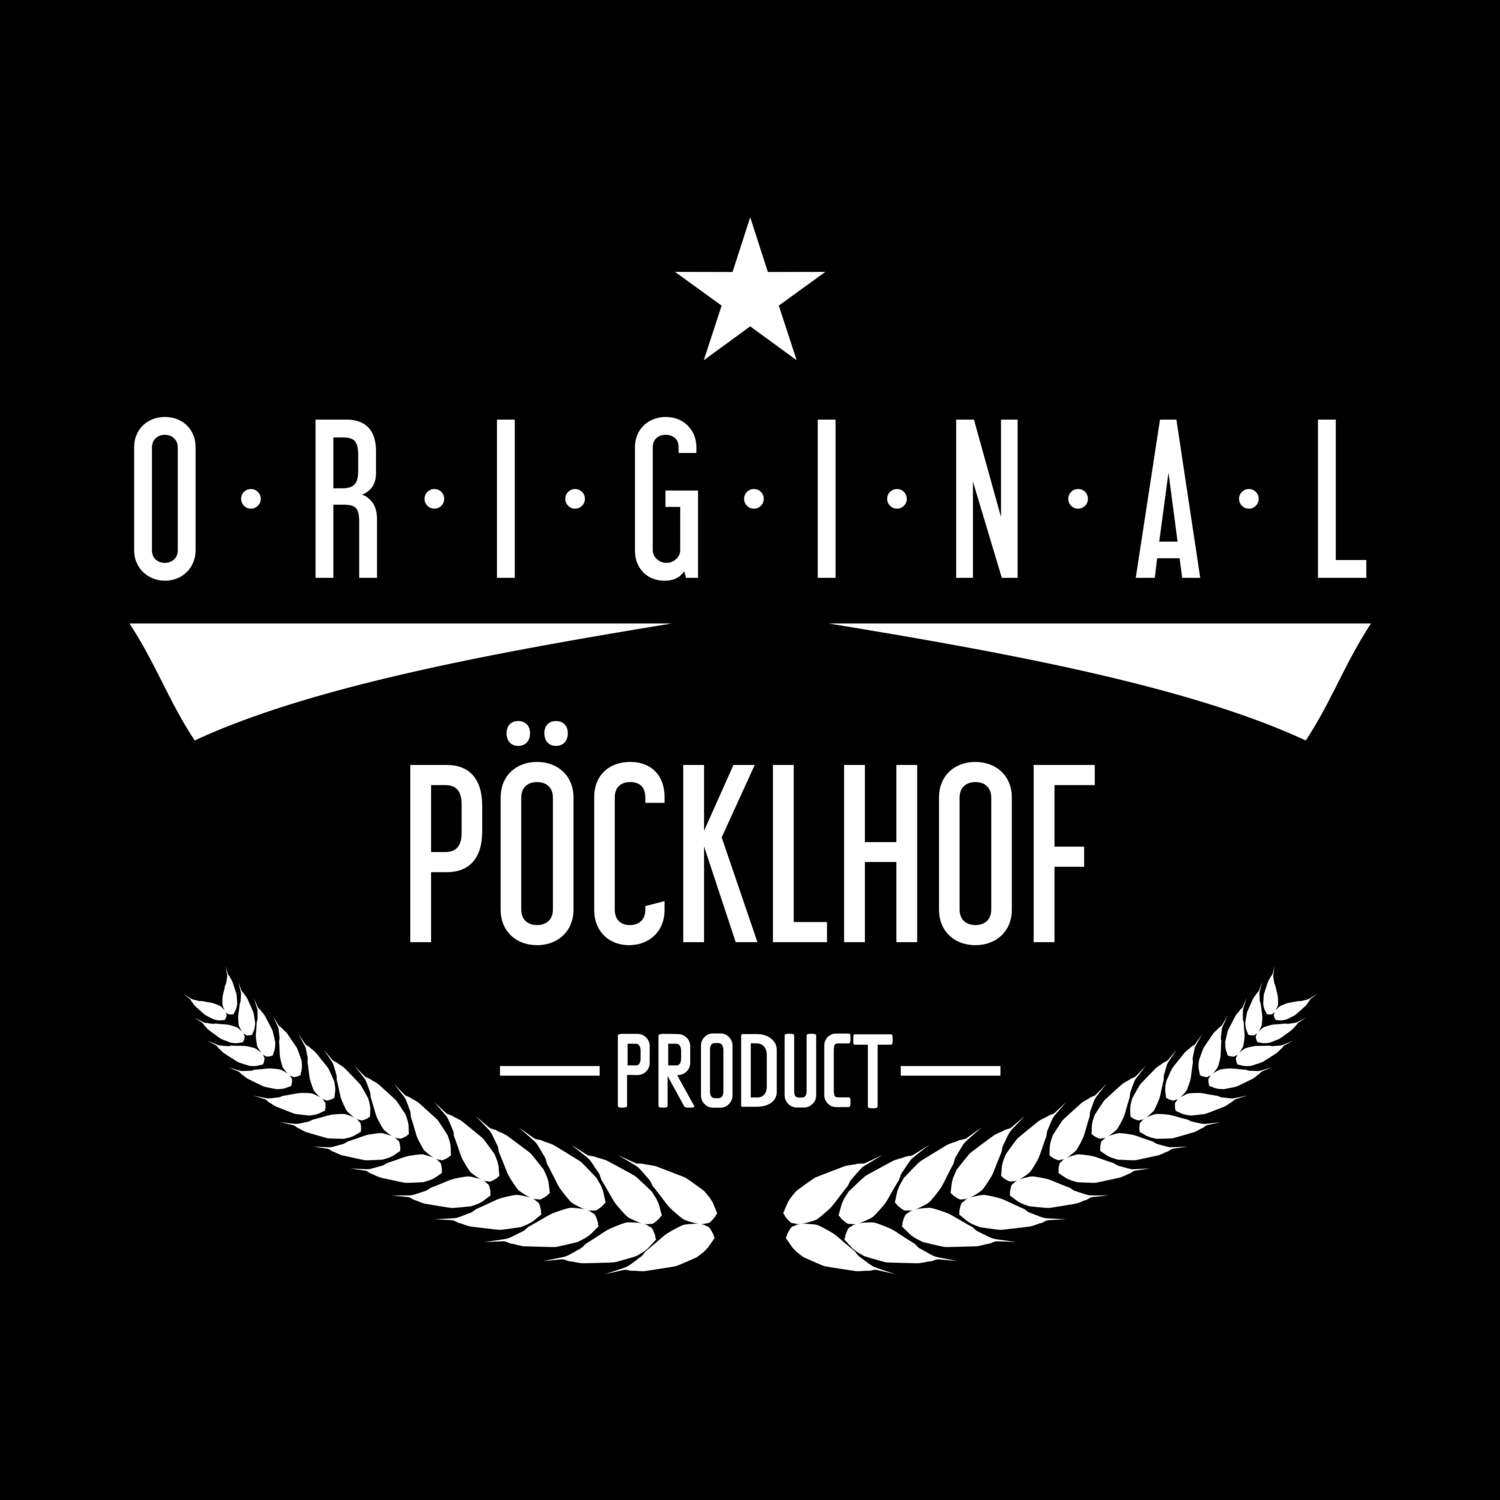 Pöcklhof T-Shirt »Original Product«